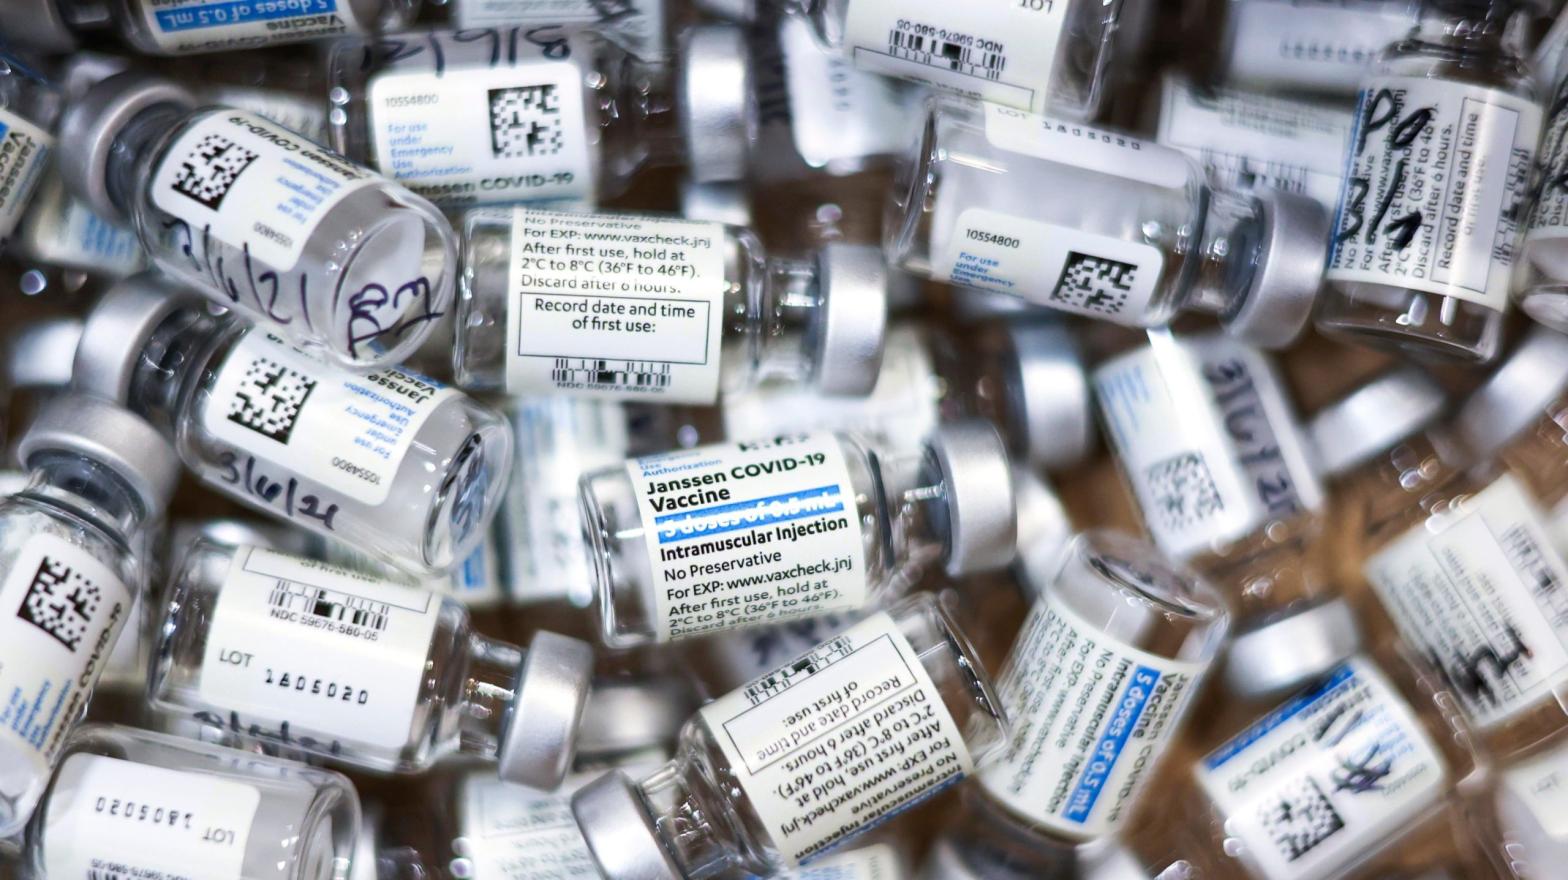 Empty vials of the Johnson & Johnson vaccine (Photo: Michael Ciaglo, Getty Images)